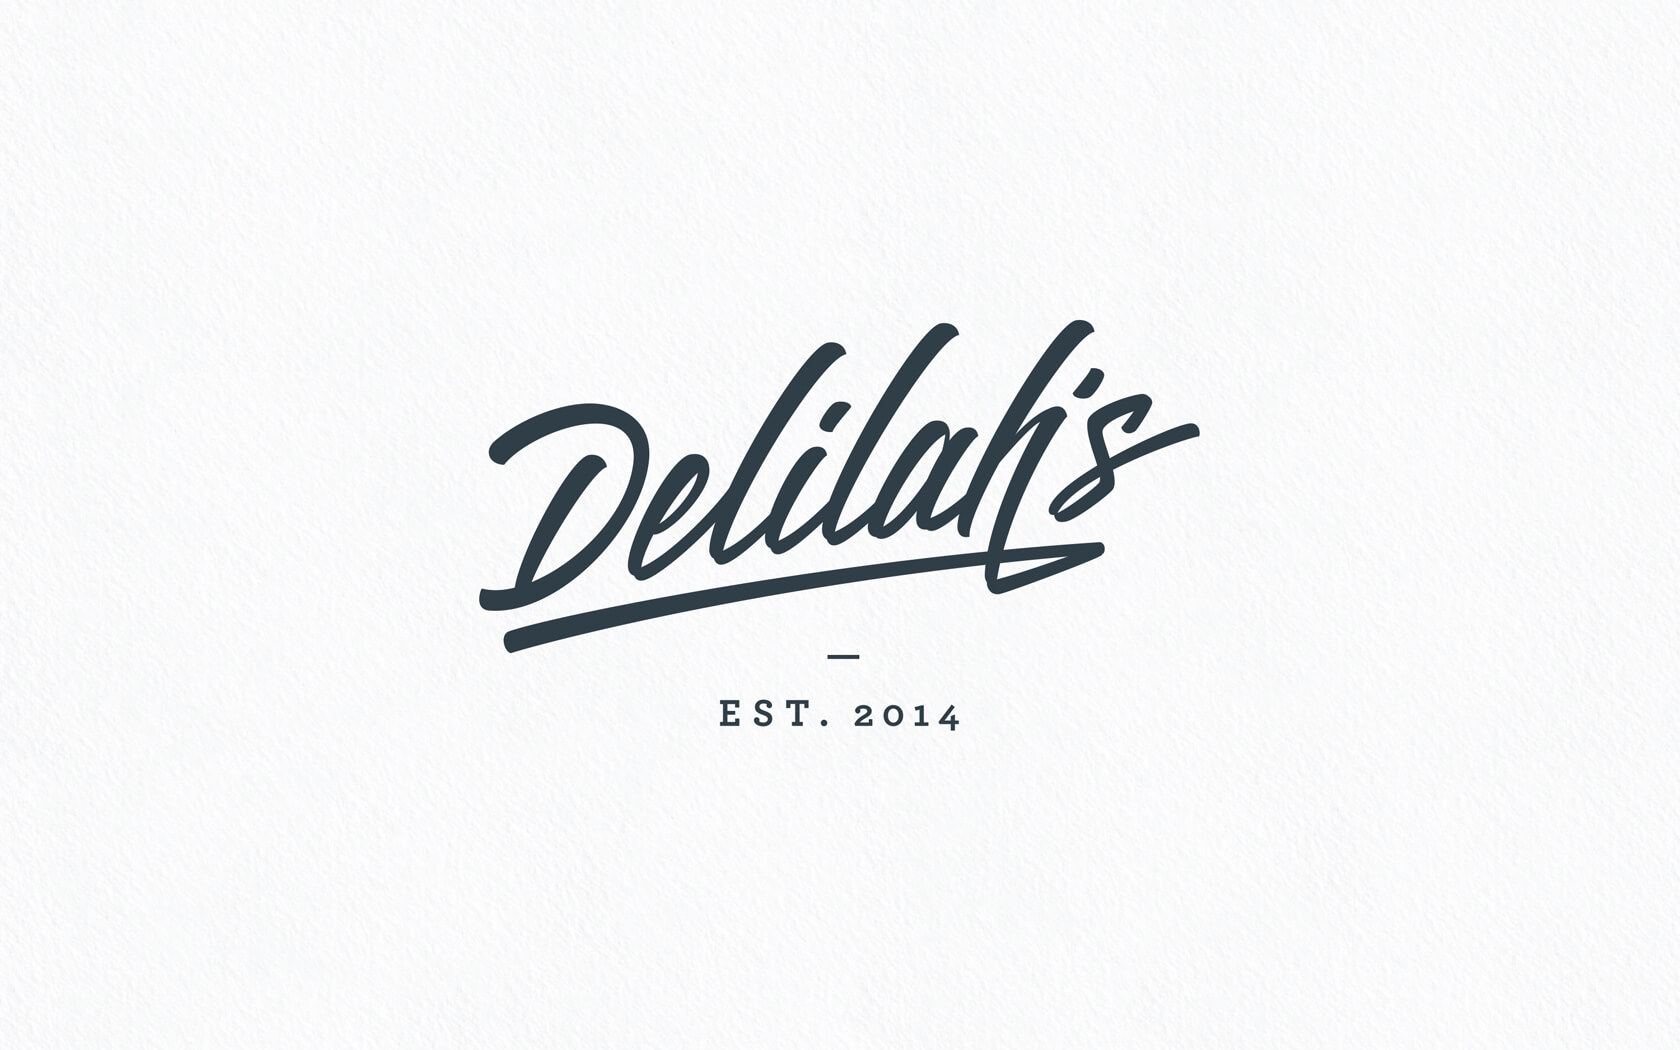 Delilah’s. Brand logo in charcoal blue